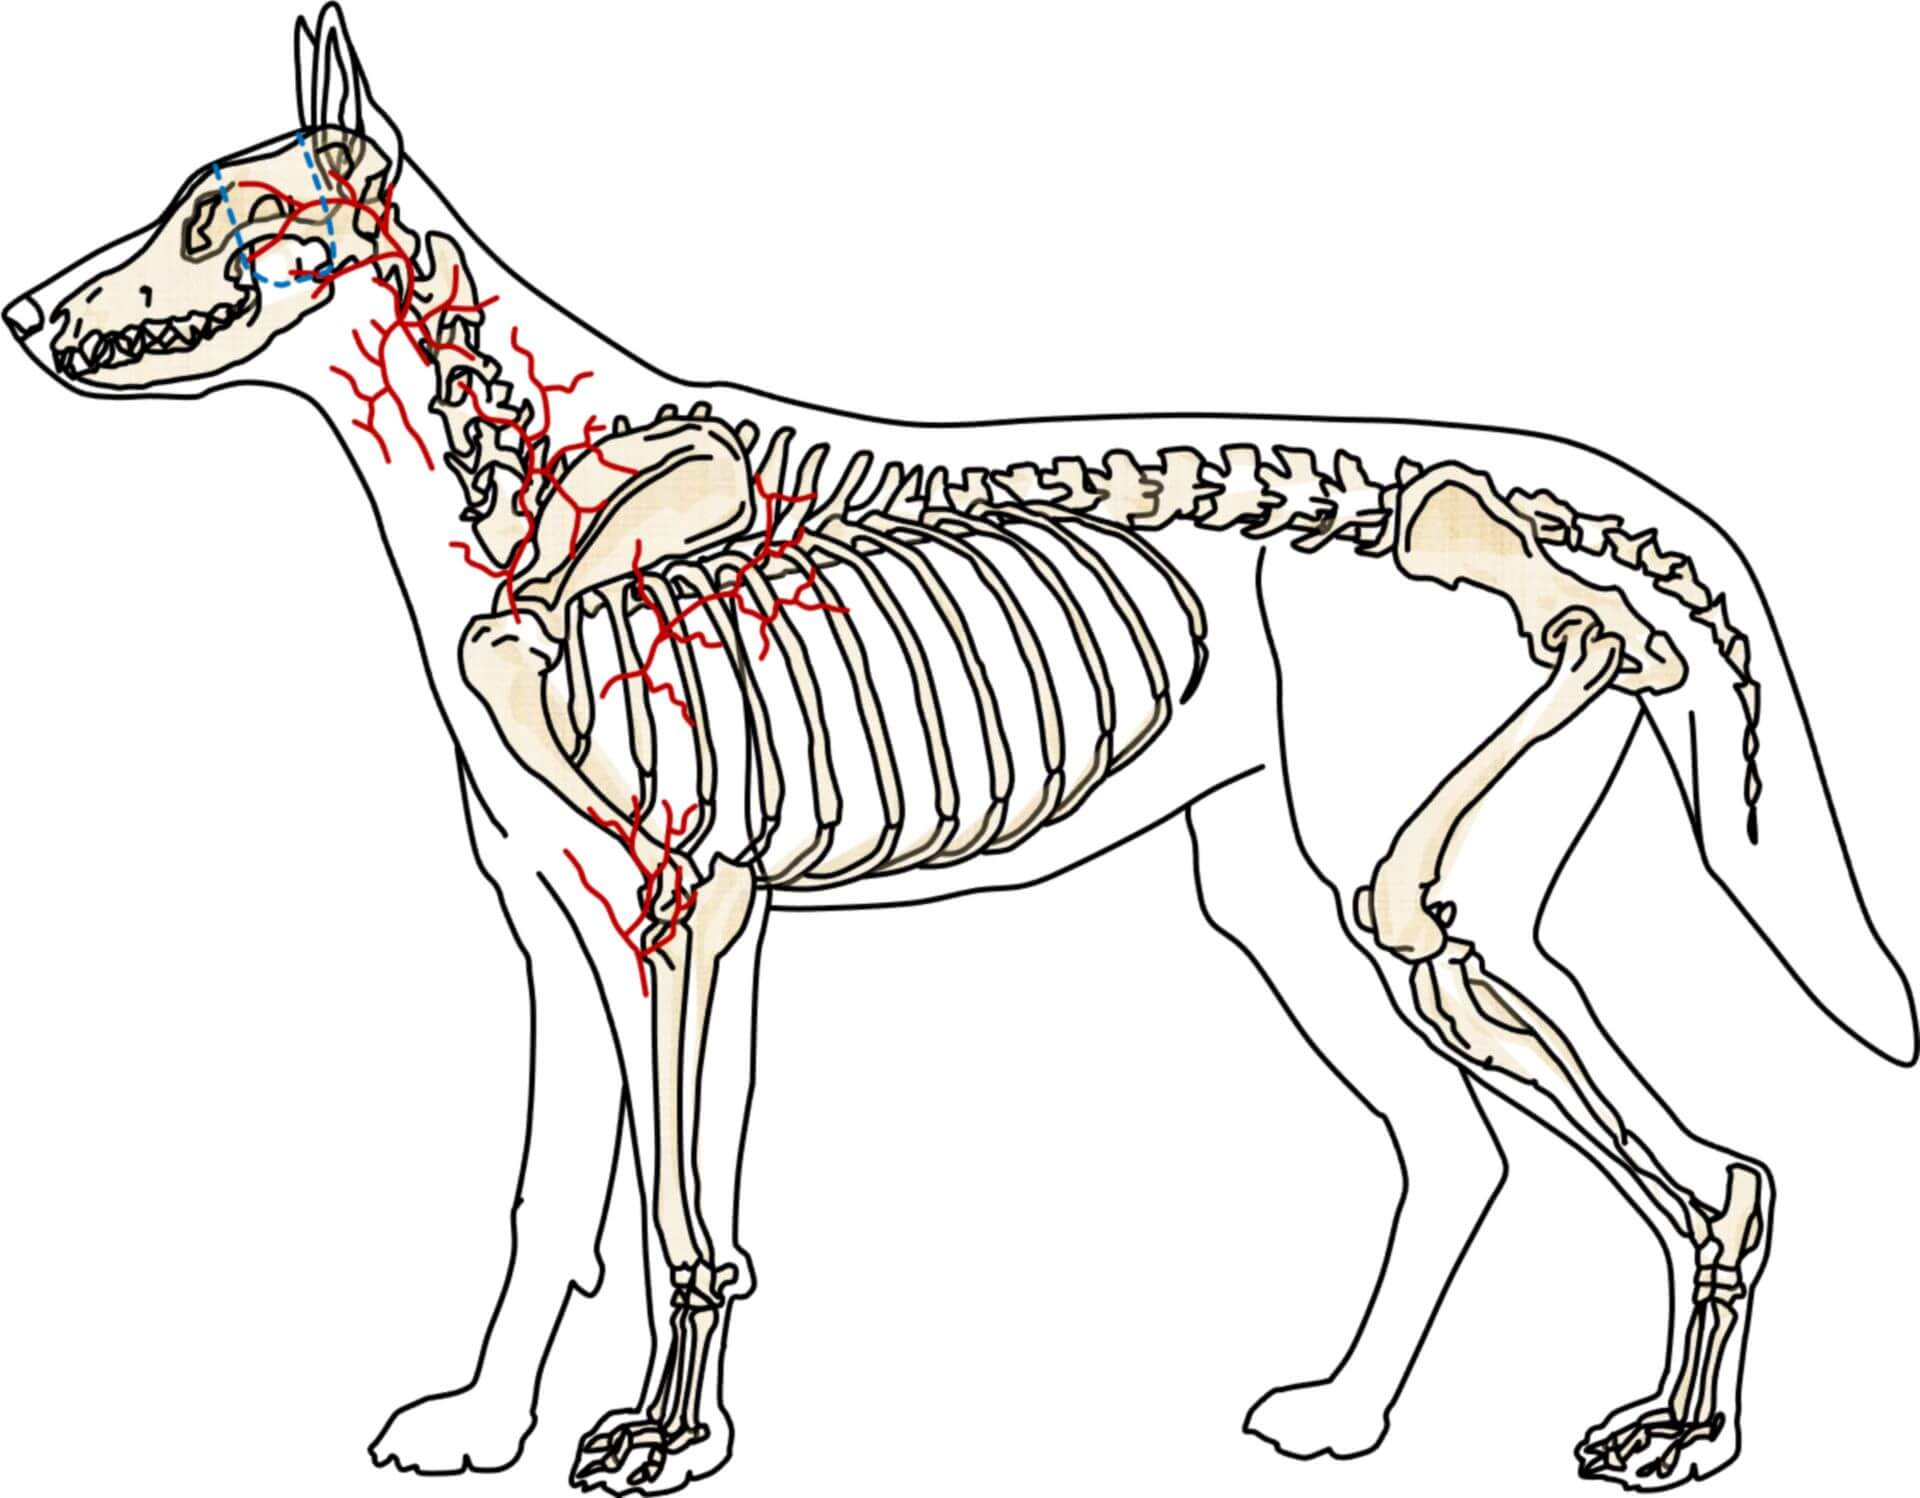 Arterienlappen der Arteria temporalis superficialis (Hund)